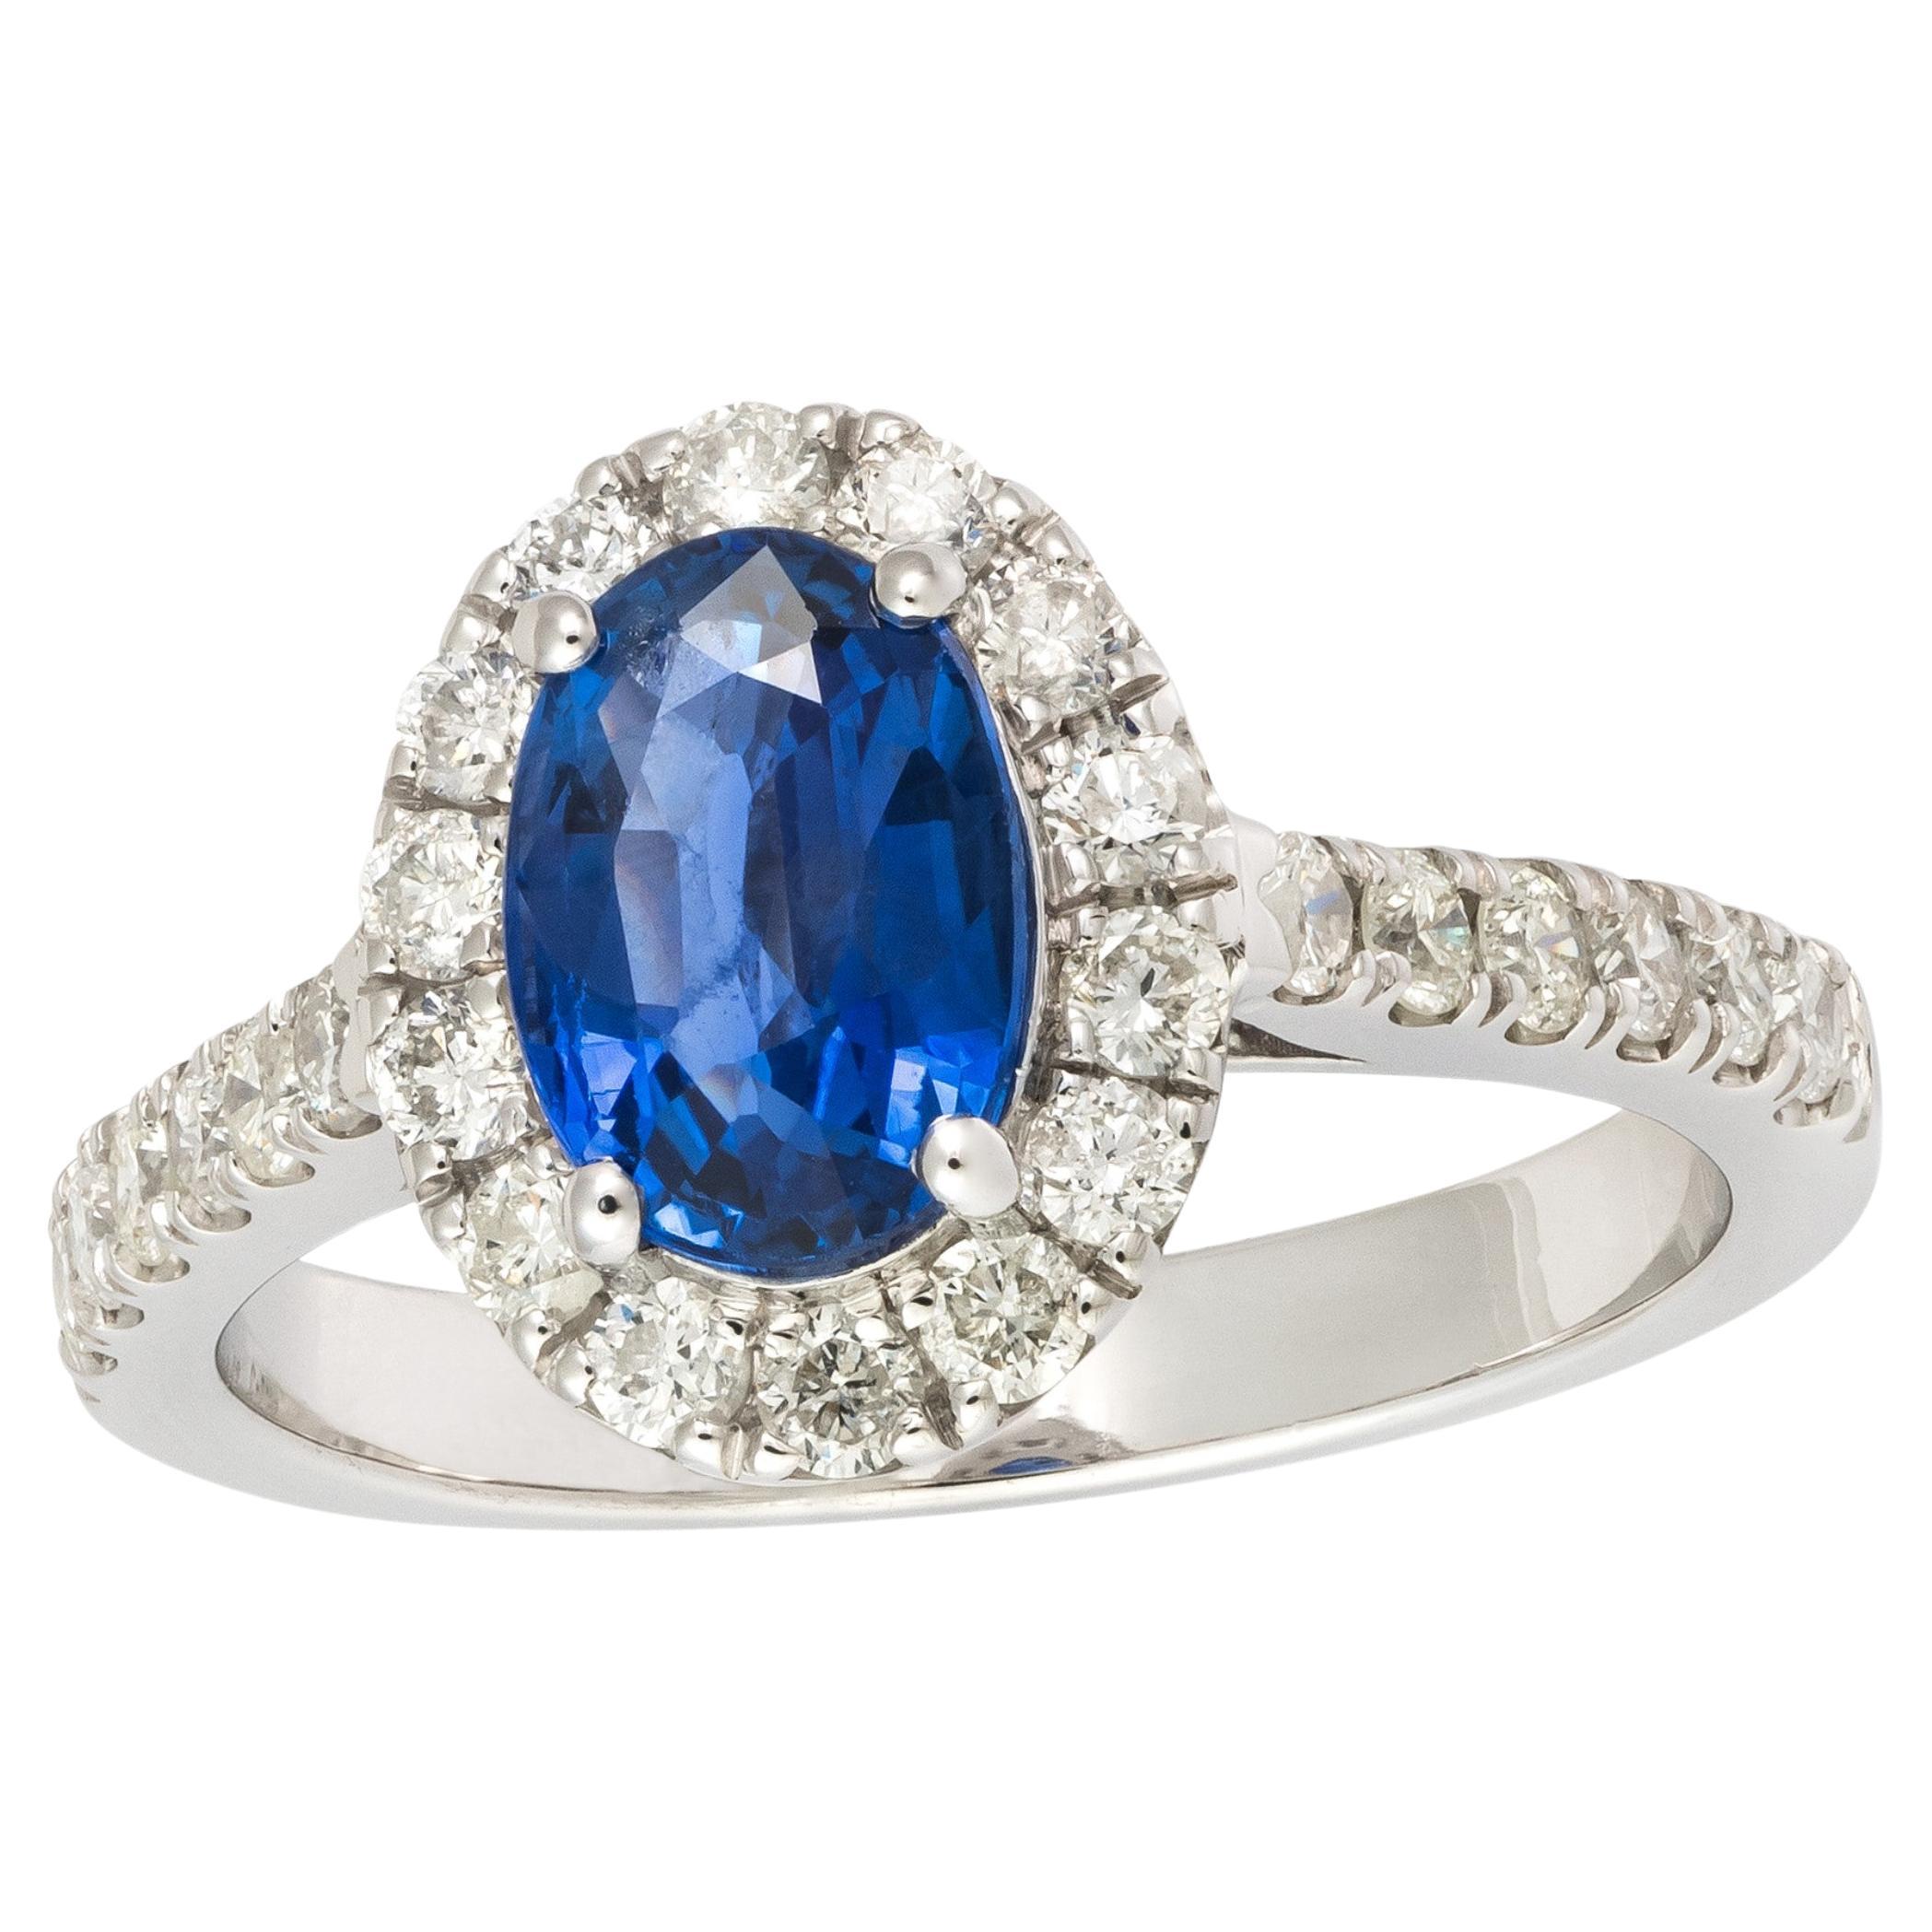 NWT $5, 500 18KT Gold Beautiful 2.70CT Oval Blue Sapphire Diamond Ring